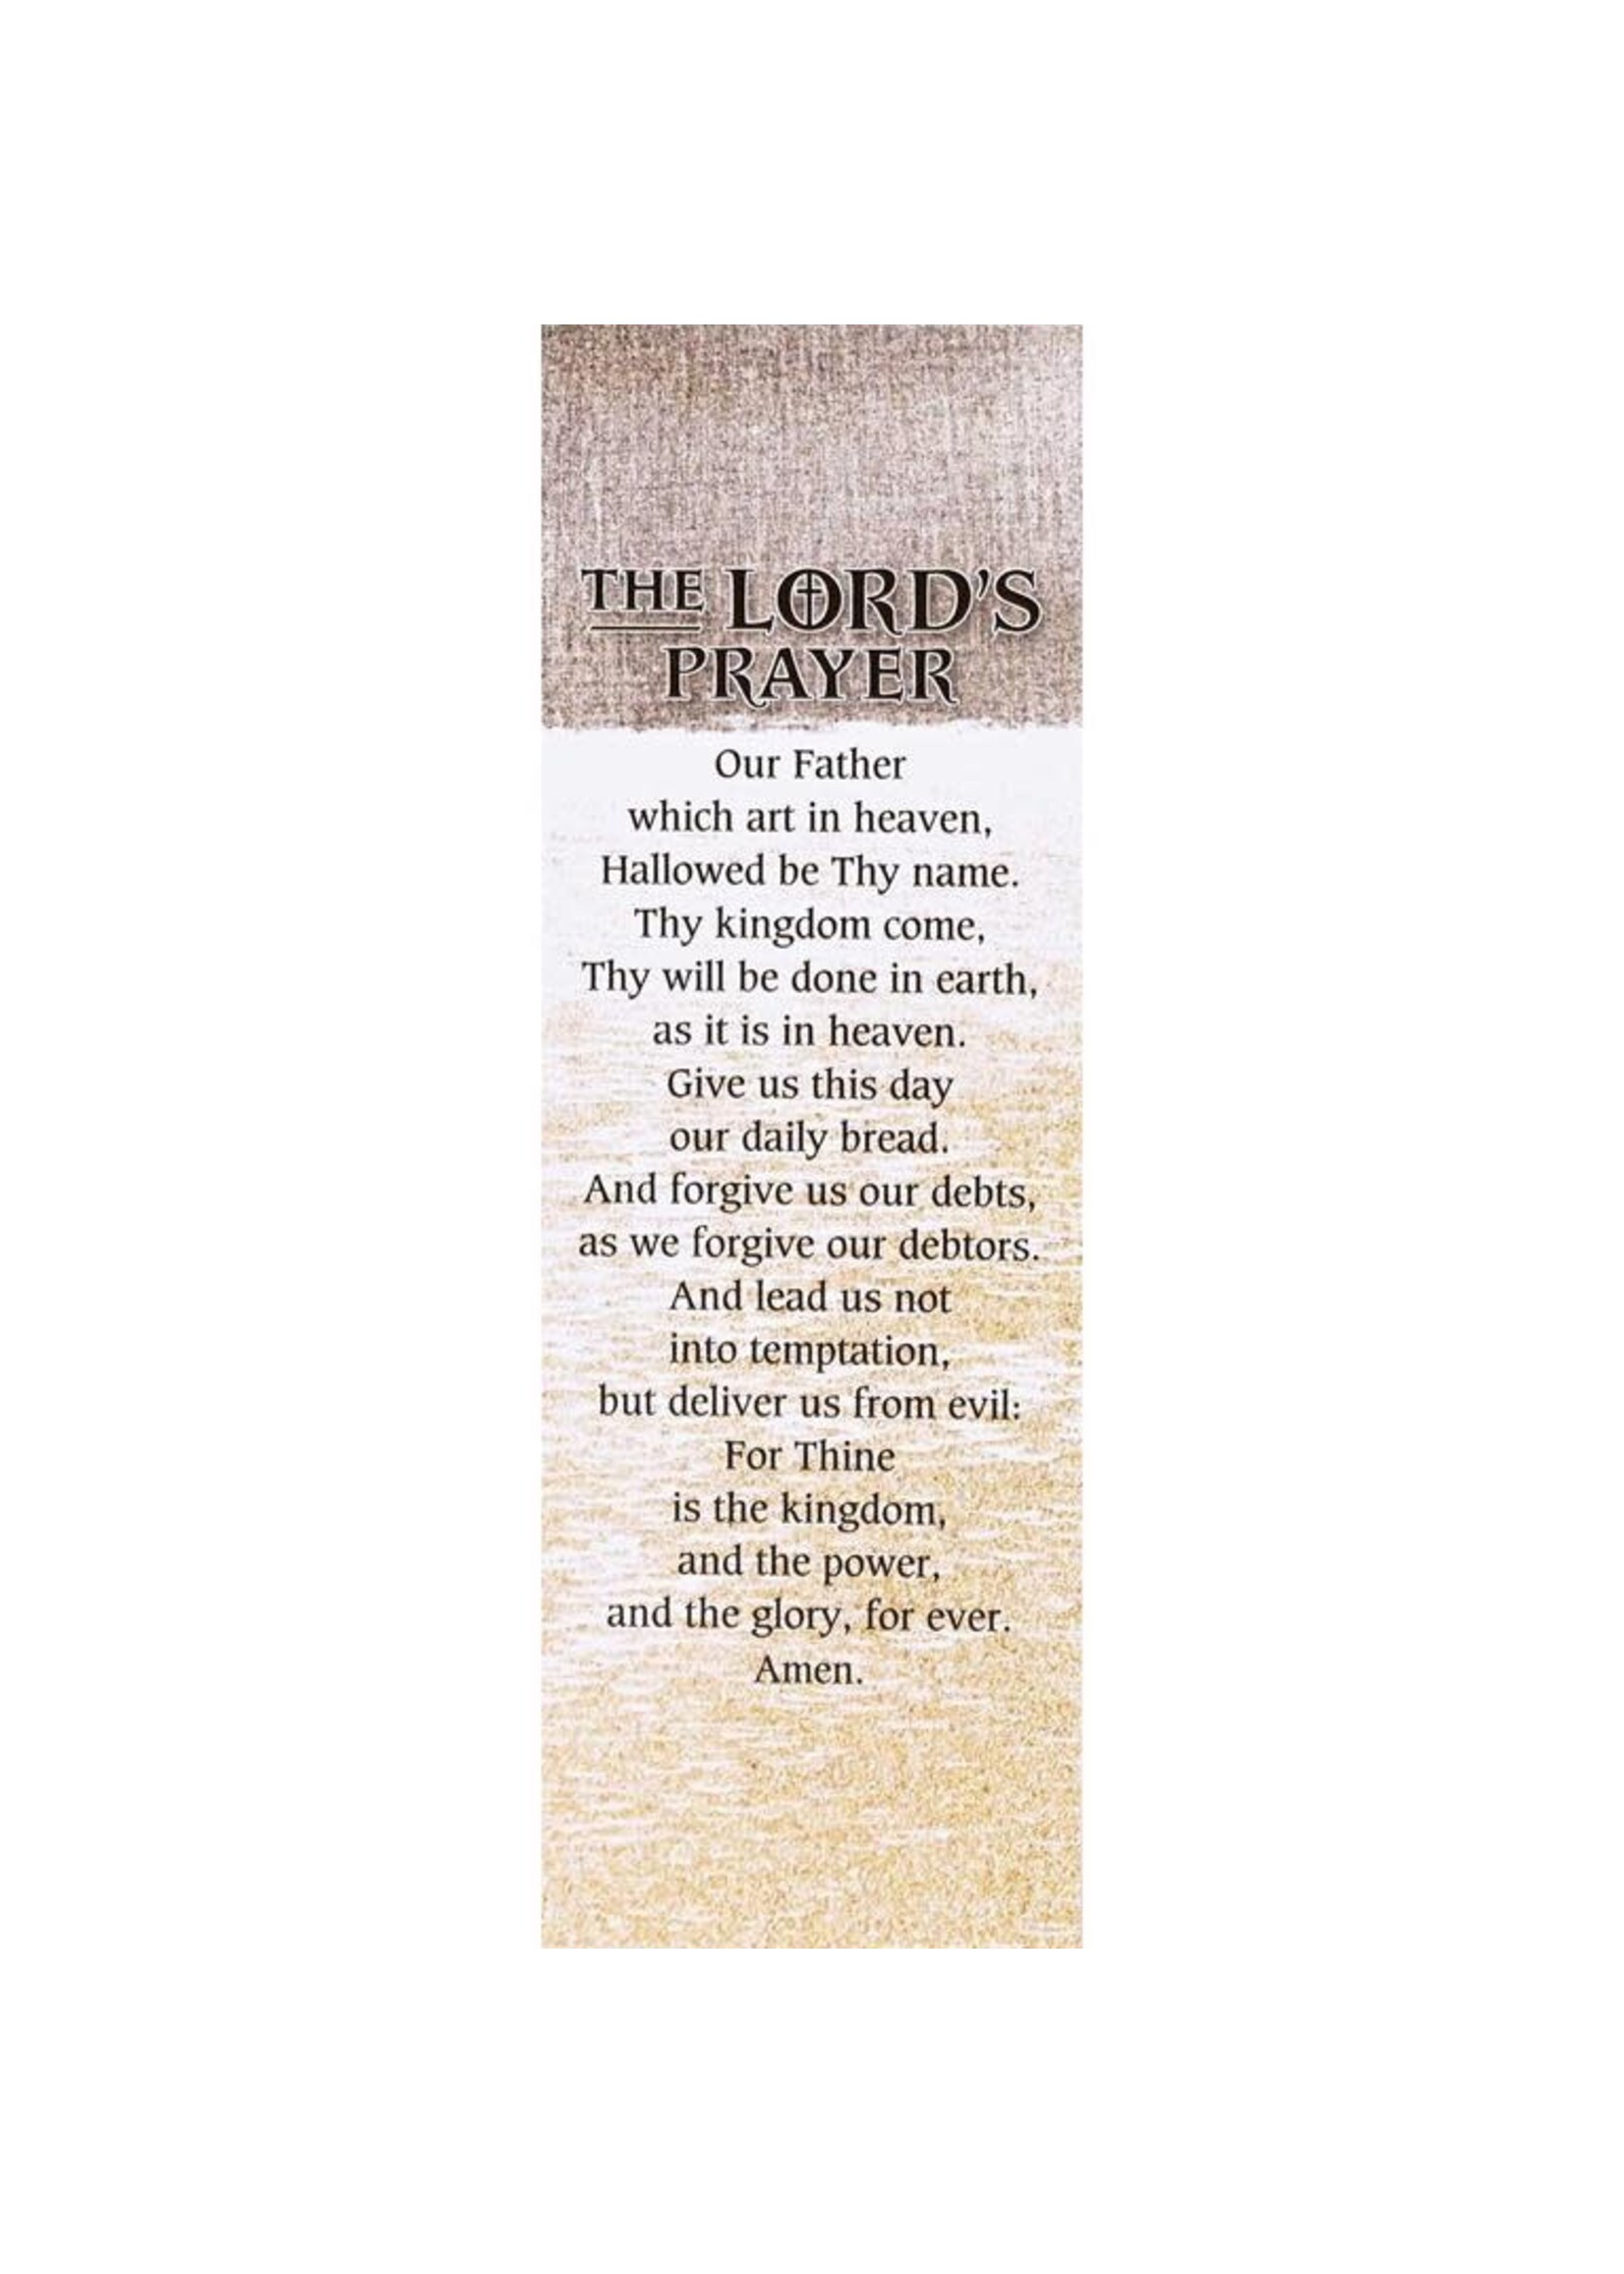 Bookmark Lord's Prayer